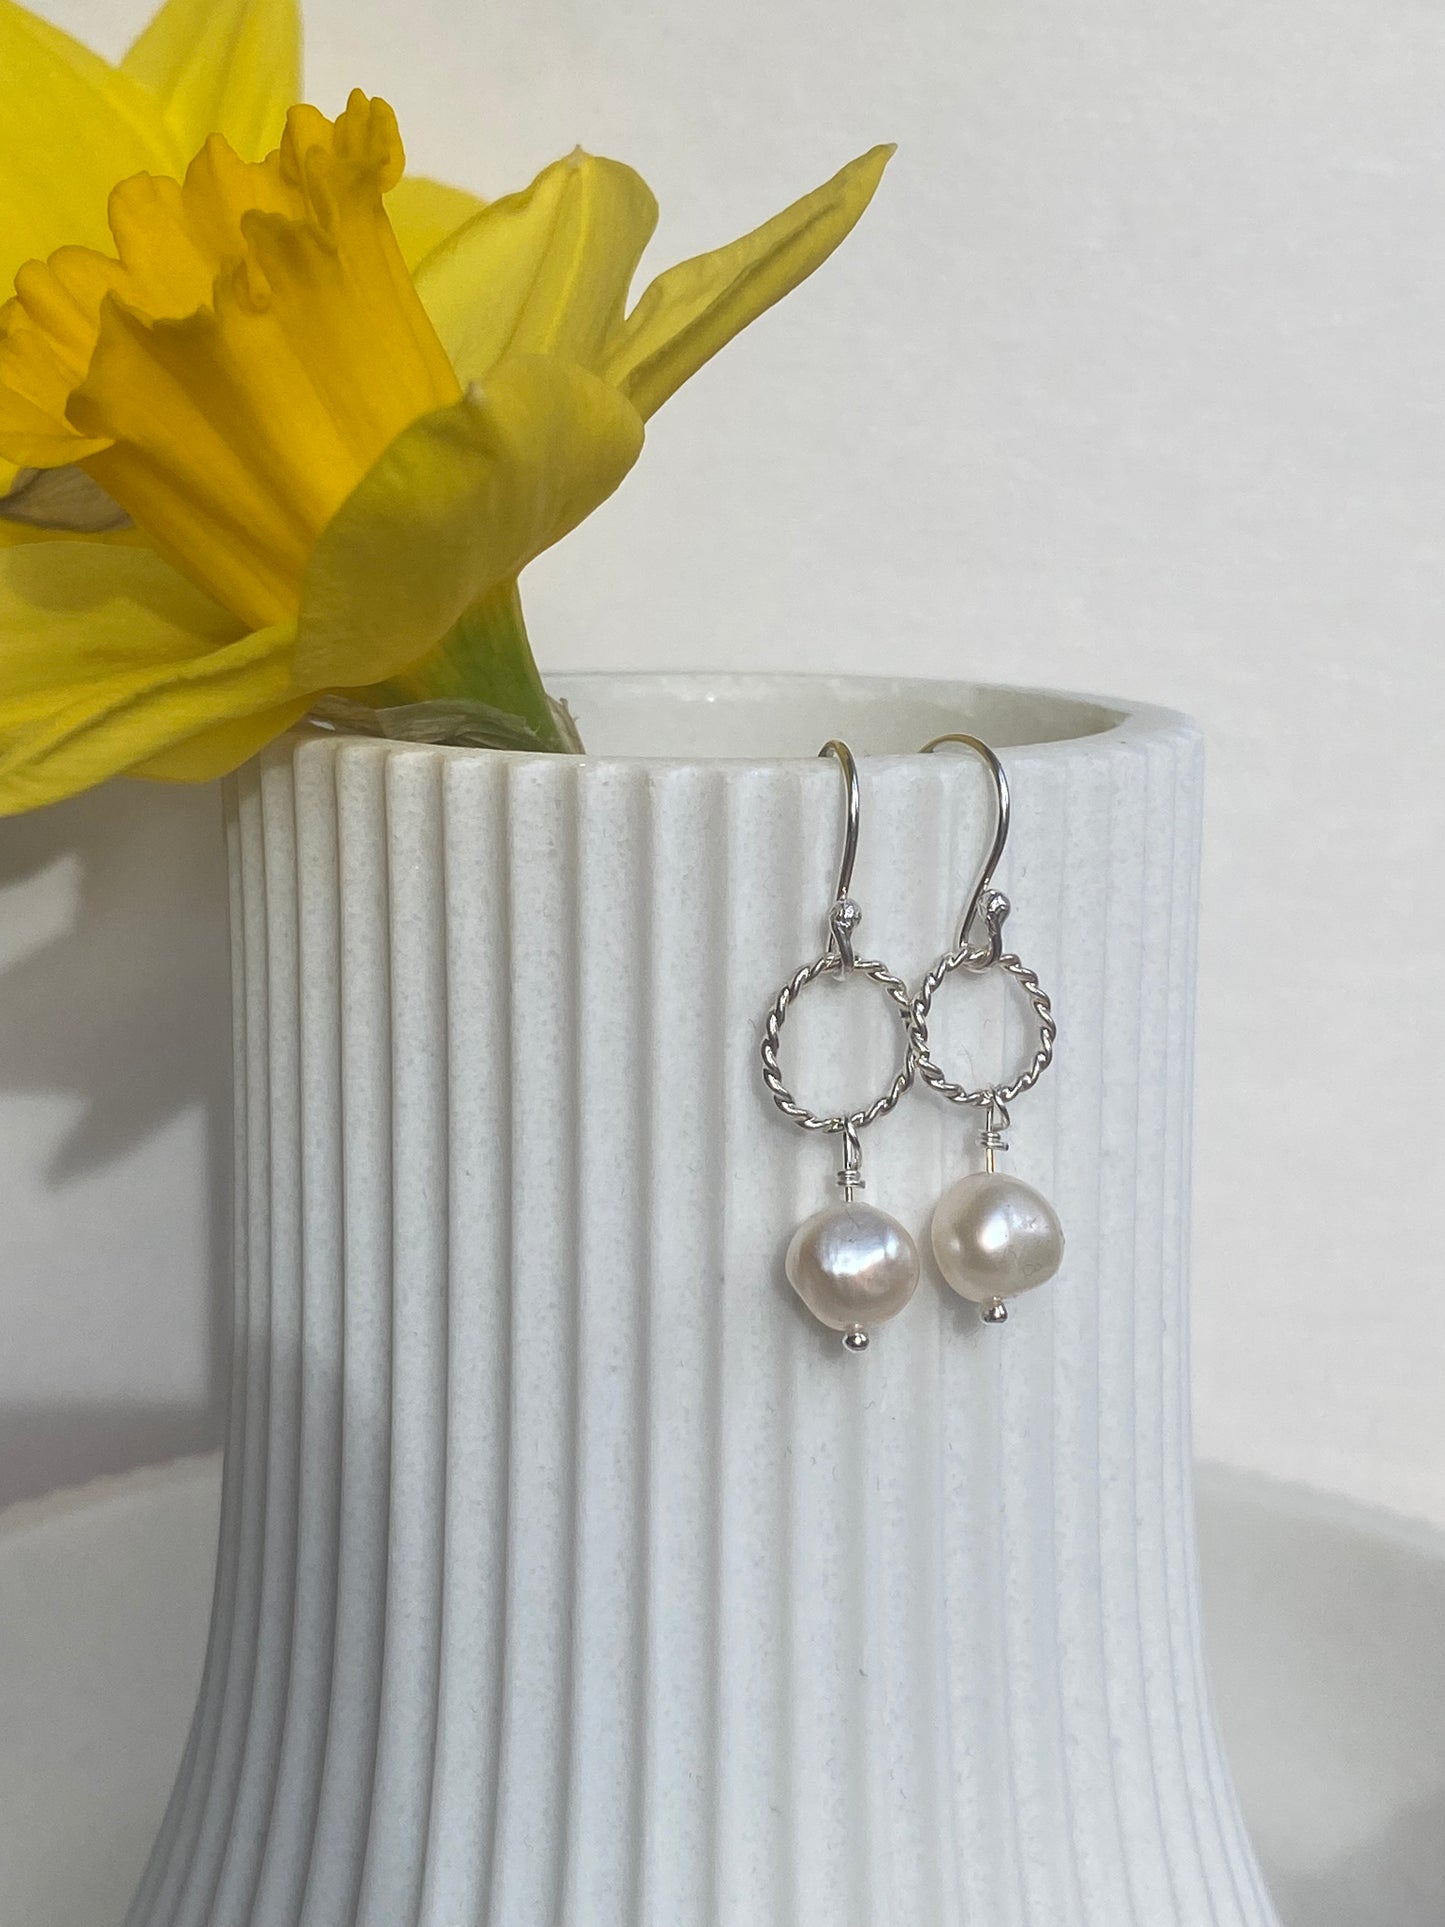 White freshwater Pearl earrings